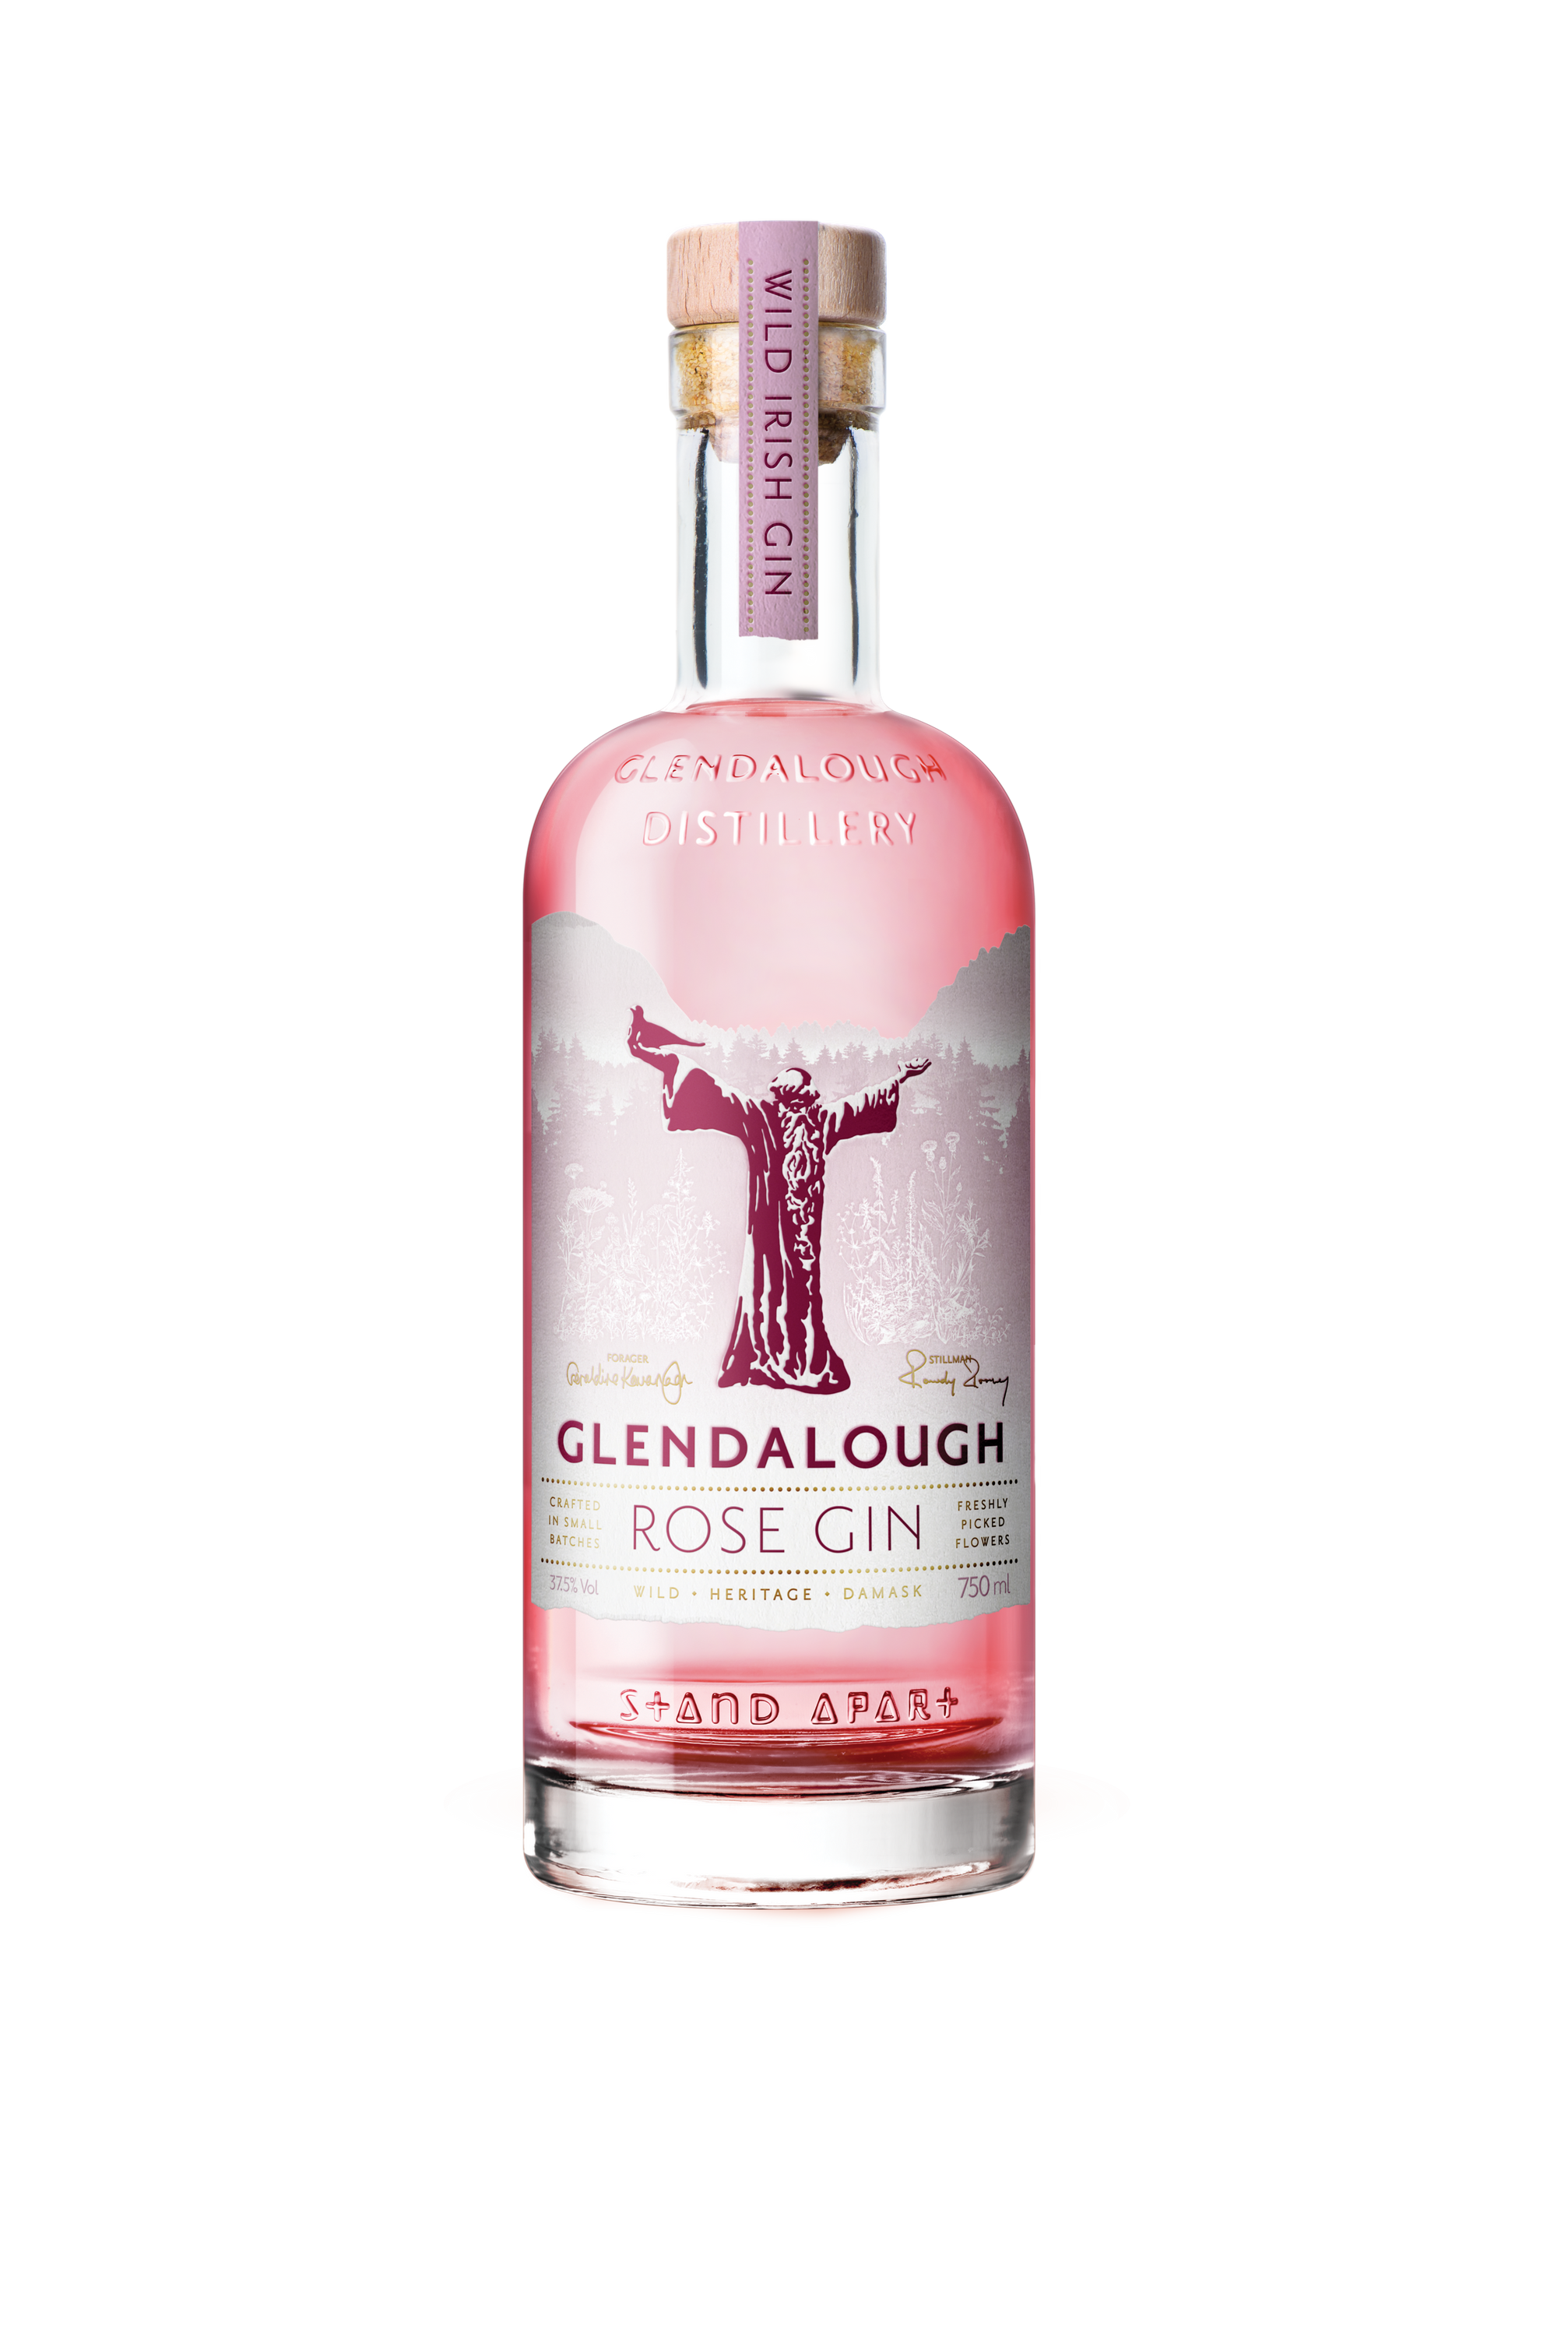 Glendalough Rose Gin 0.7l, alc. 37.5% ABV, Gin Ireland 